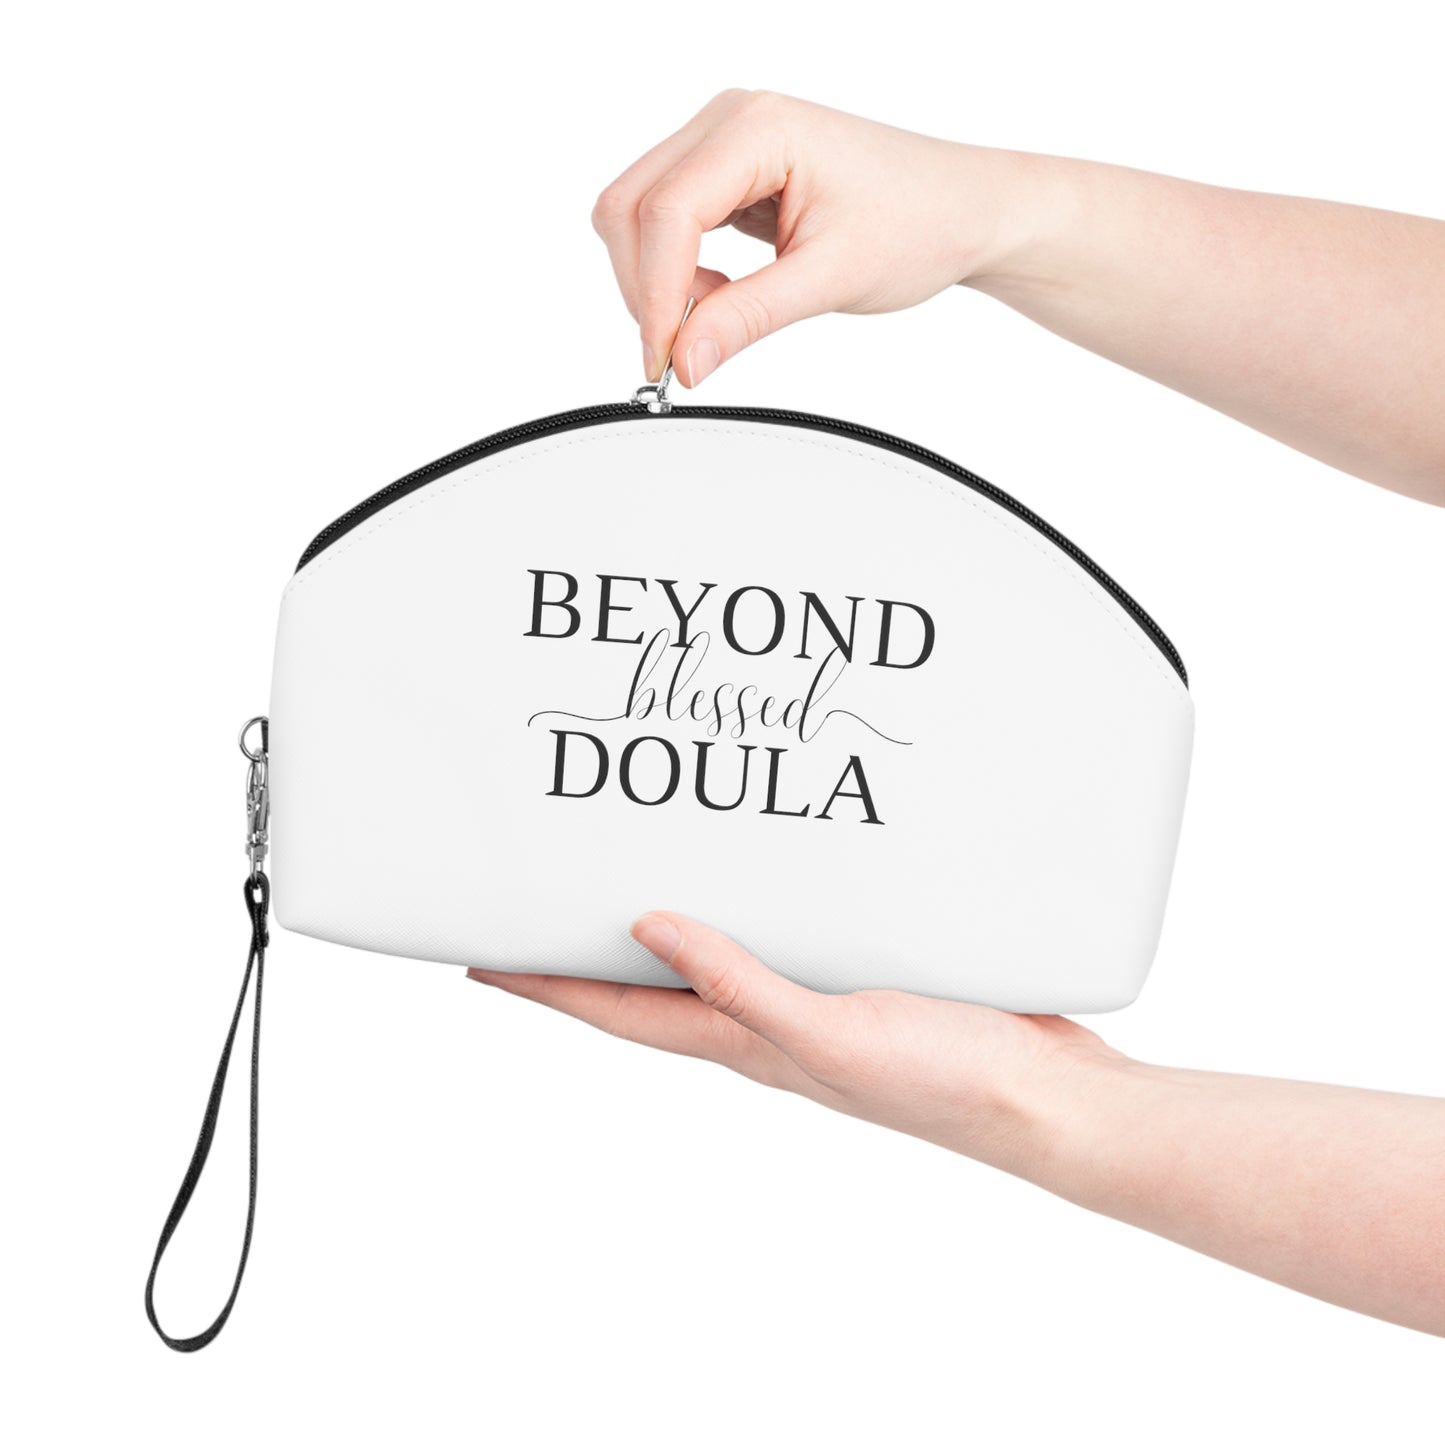 Beyond Blessed Doula - Makeup Bag - Black